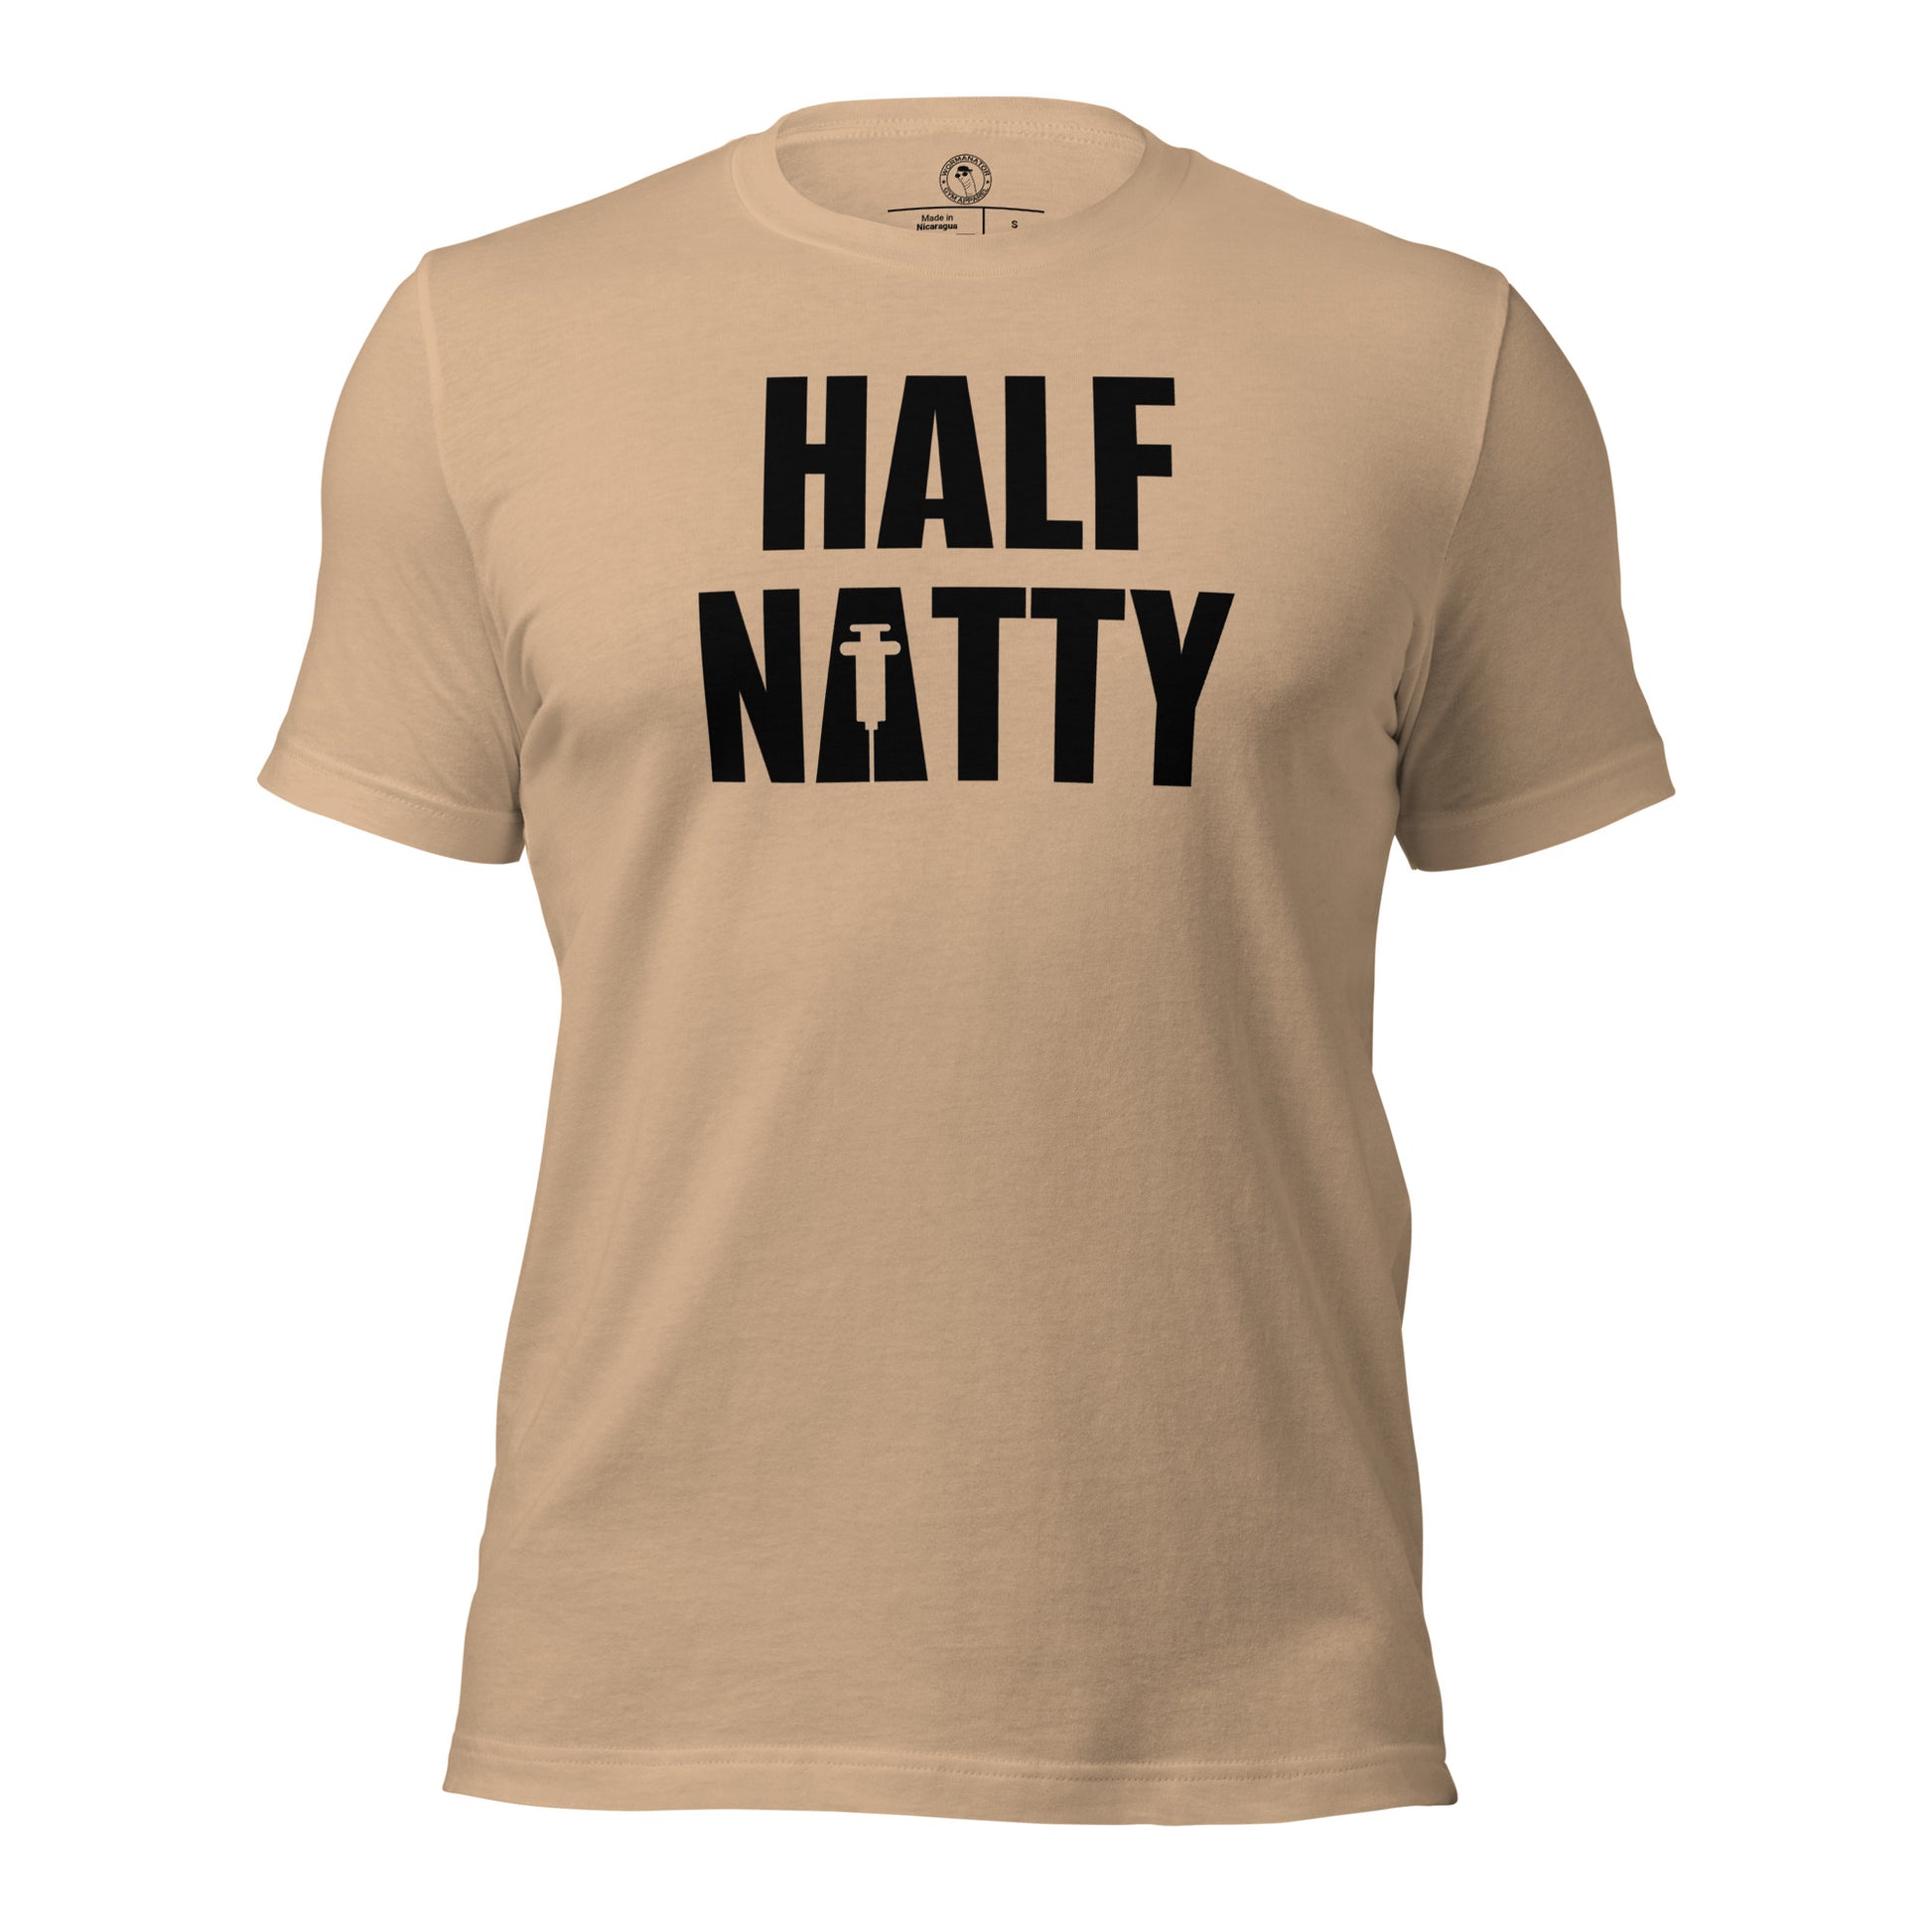 Half Natty T-Shirt in Tan